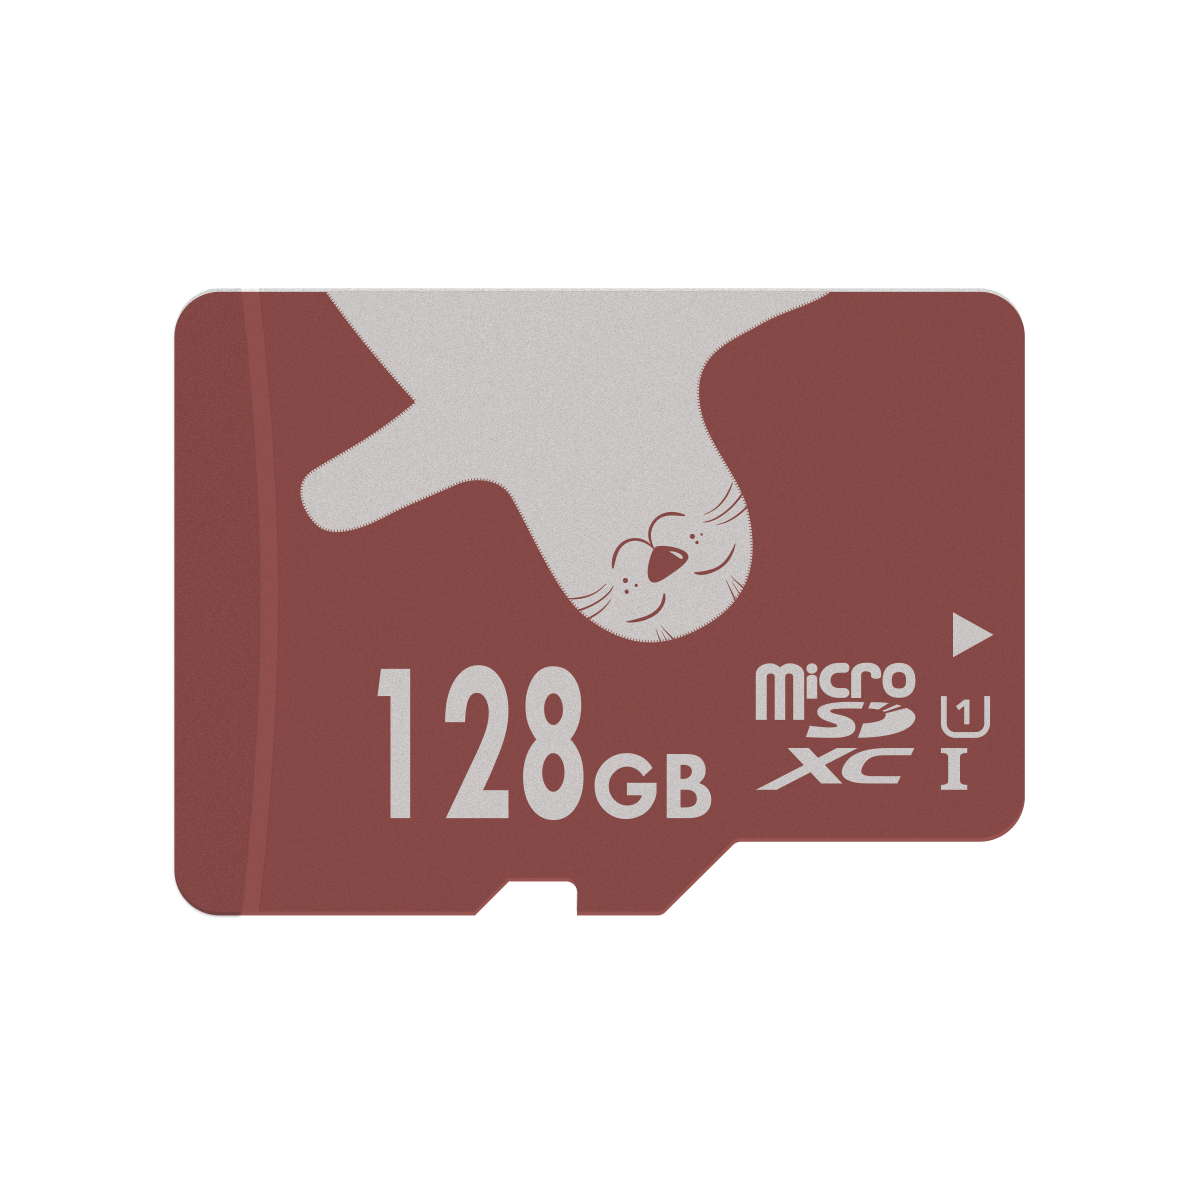 ALERTSEAL 128GB UHS-I (U1) / Class 10 (C10) microSDXC/TF Flash Memory Card